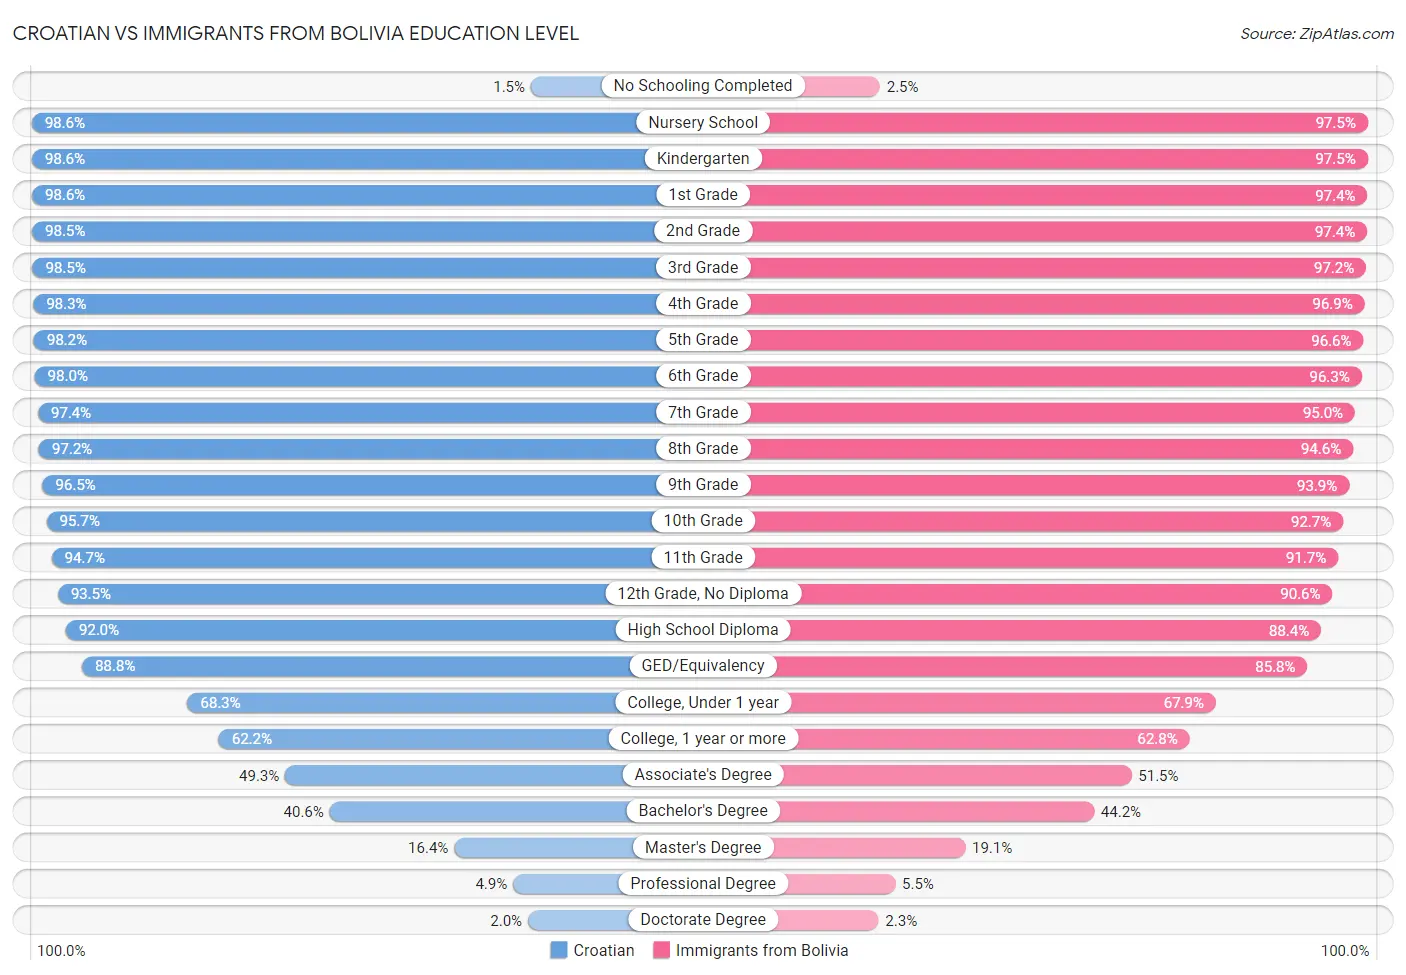 Croatian vs Immigrants from Bolivia Education Level